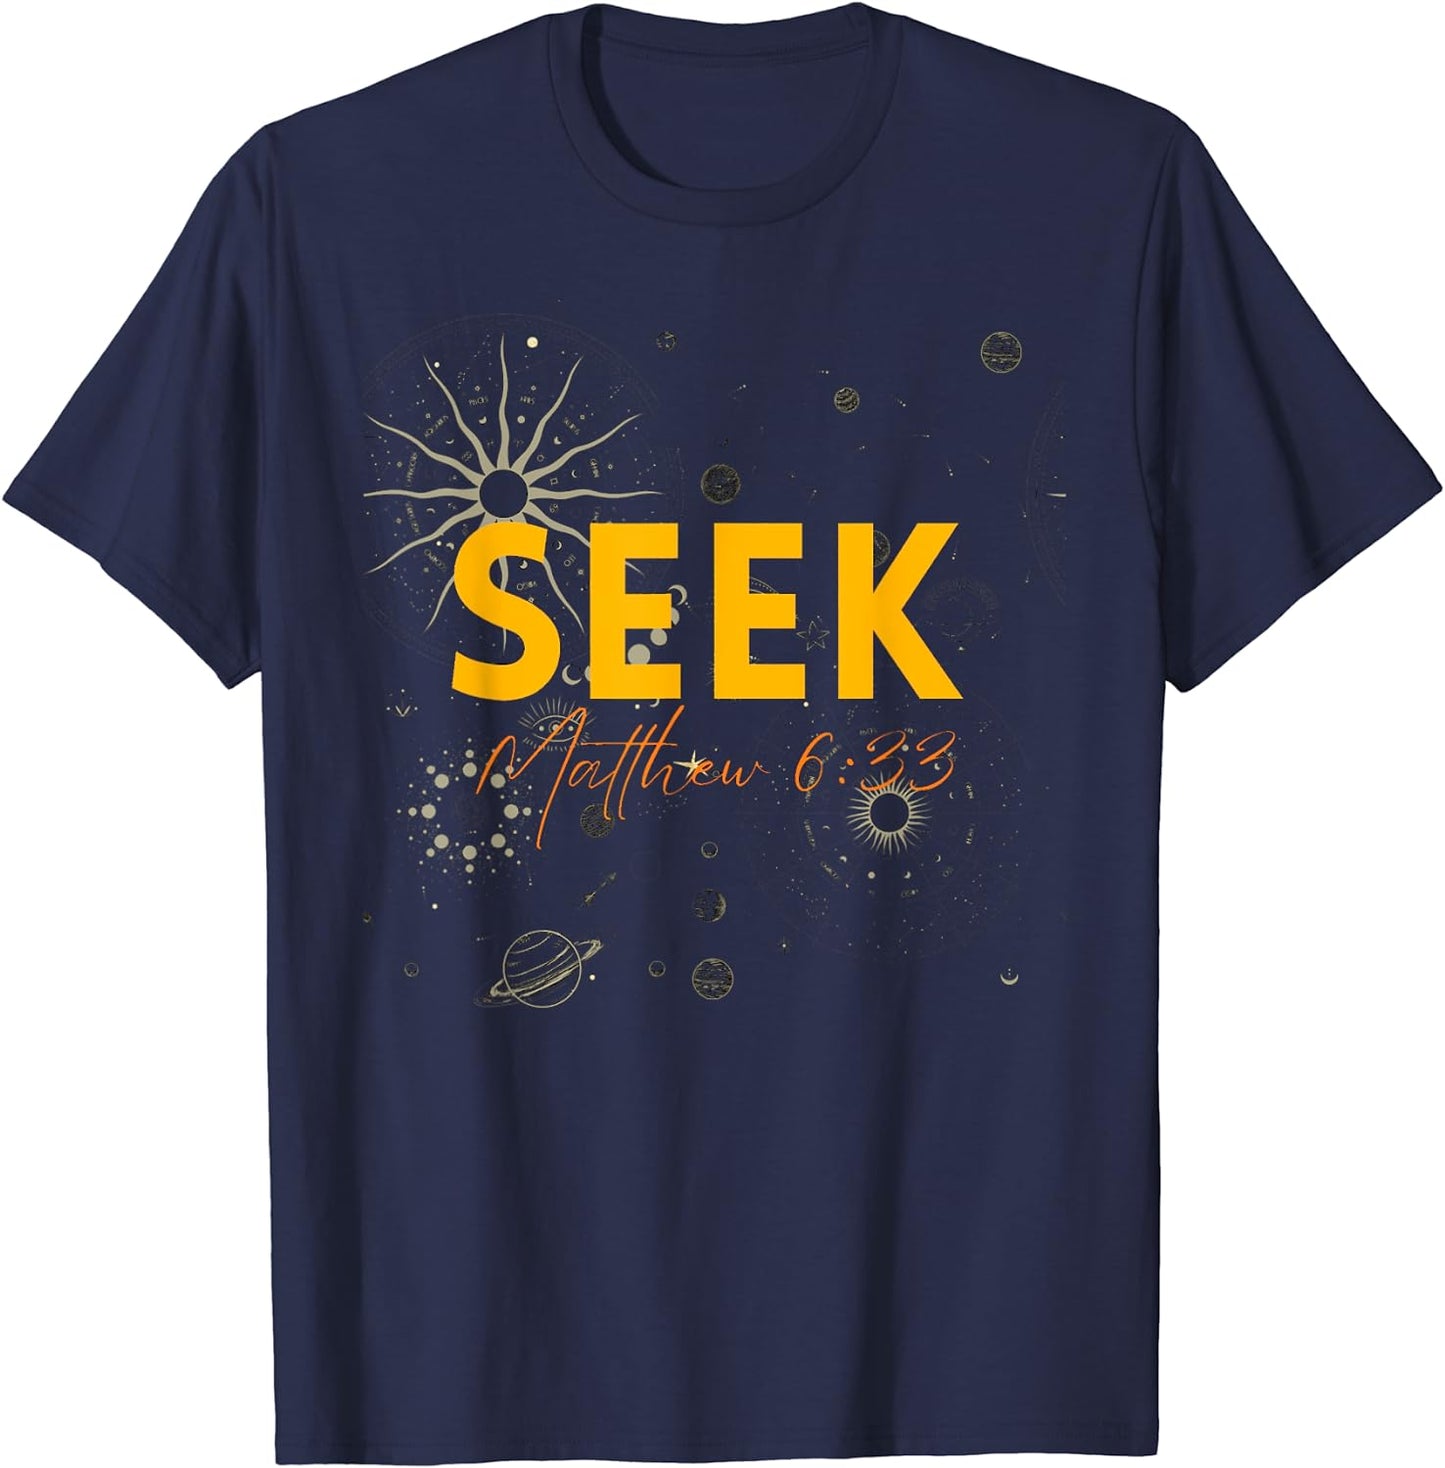 Seek - Standard T-Shirt - Fun and Inspirational Design by Crucial Key